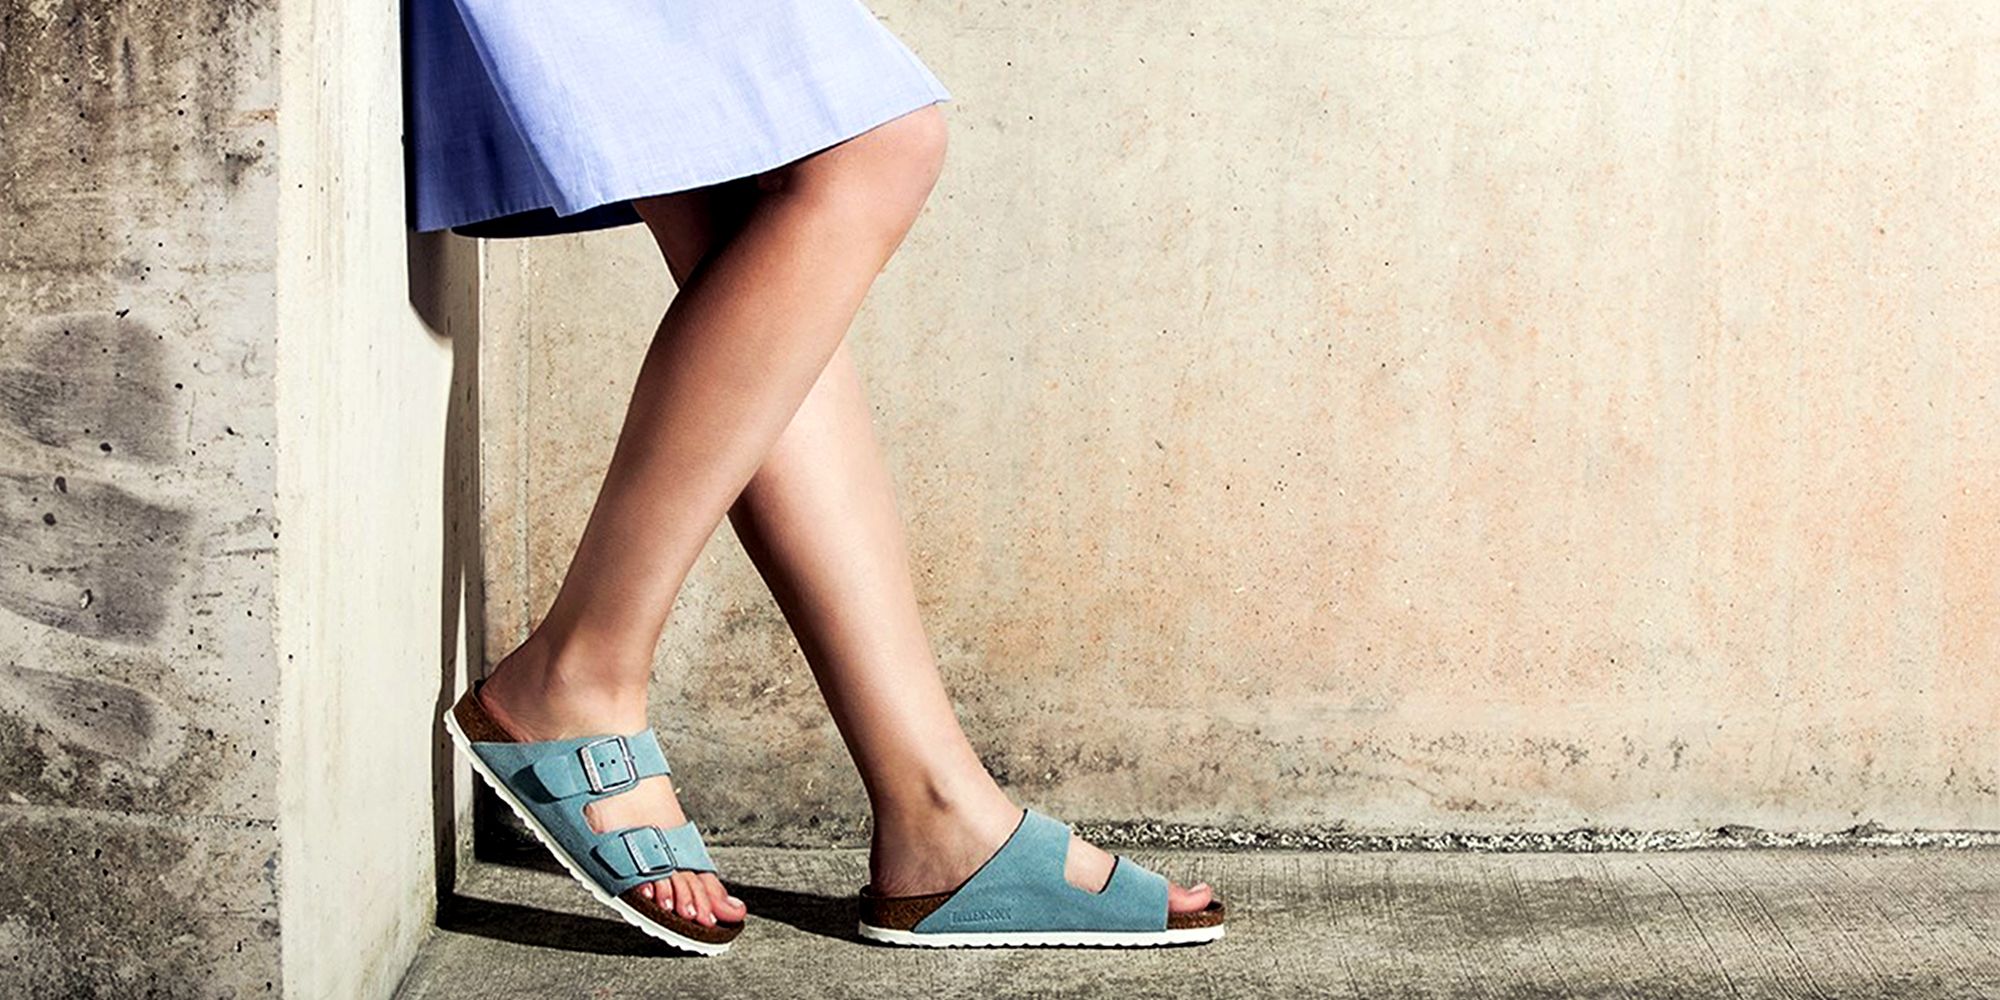 15 Best Slide Sandals for Women in 2018 